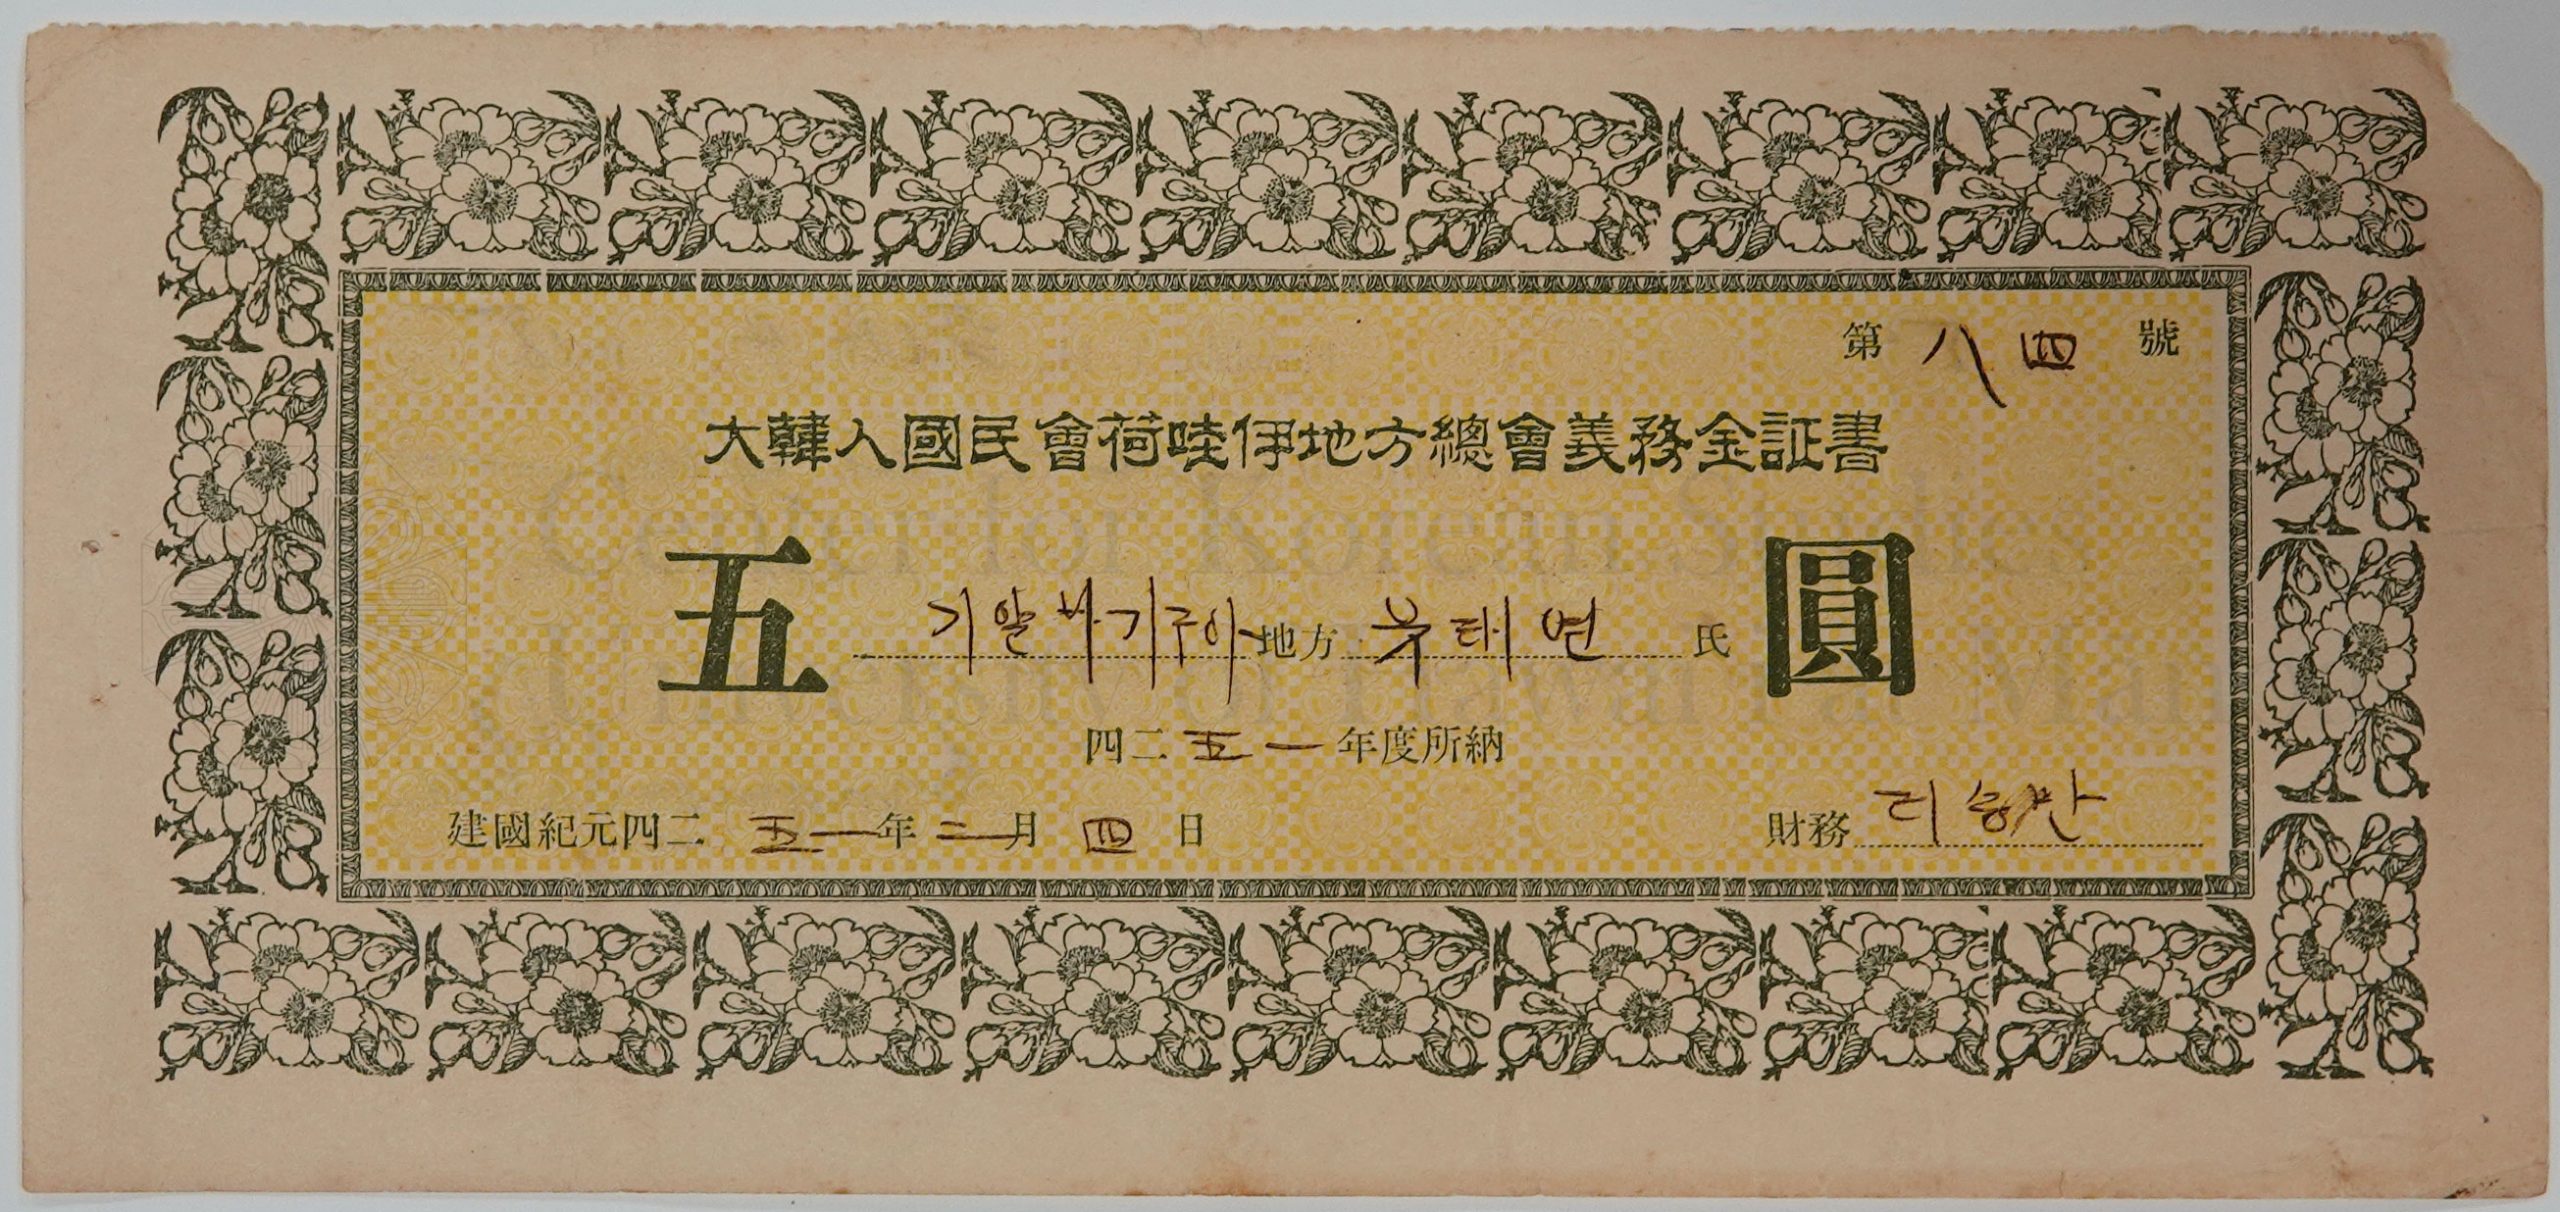 Membership dues receipt of 류태연, 1918 (Front)